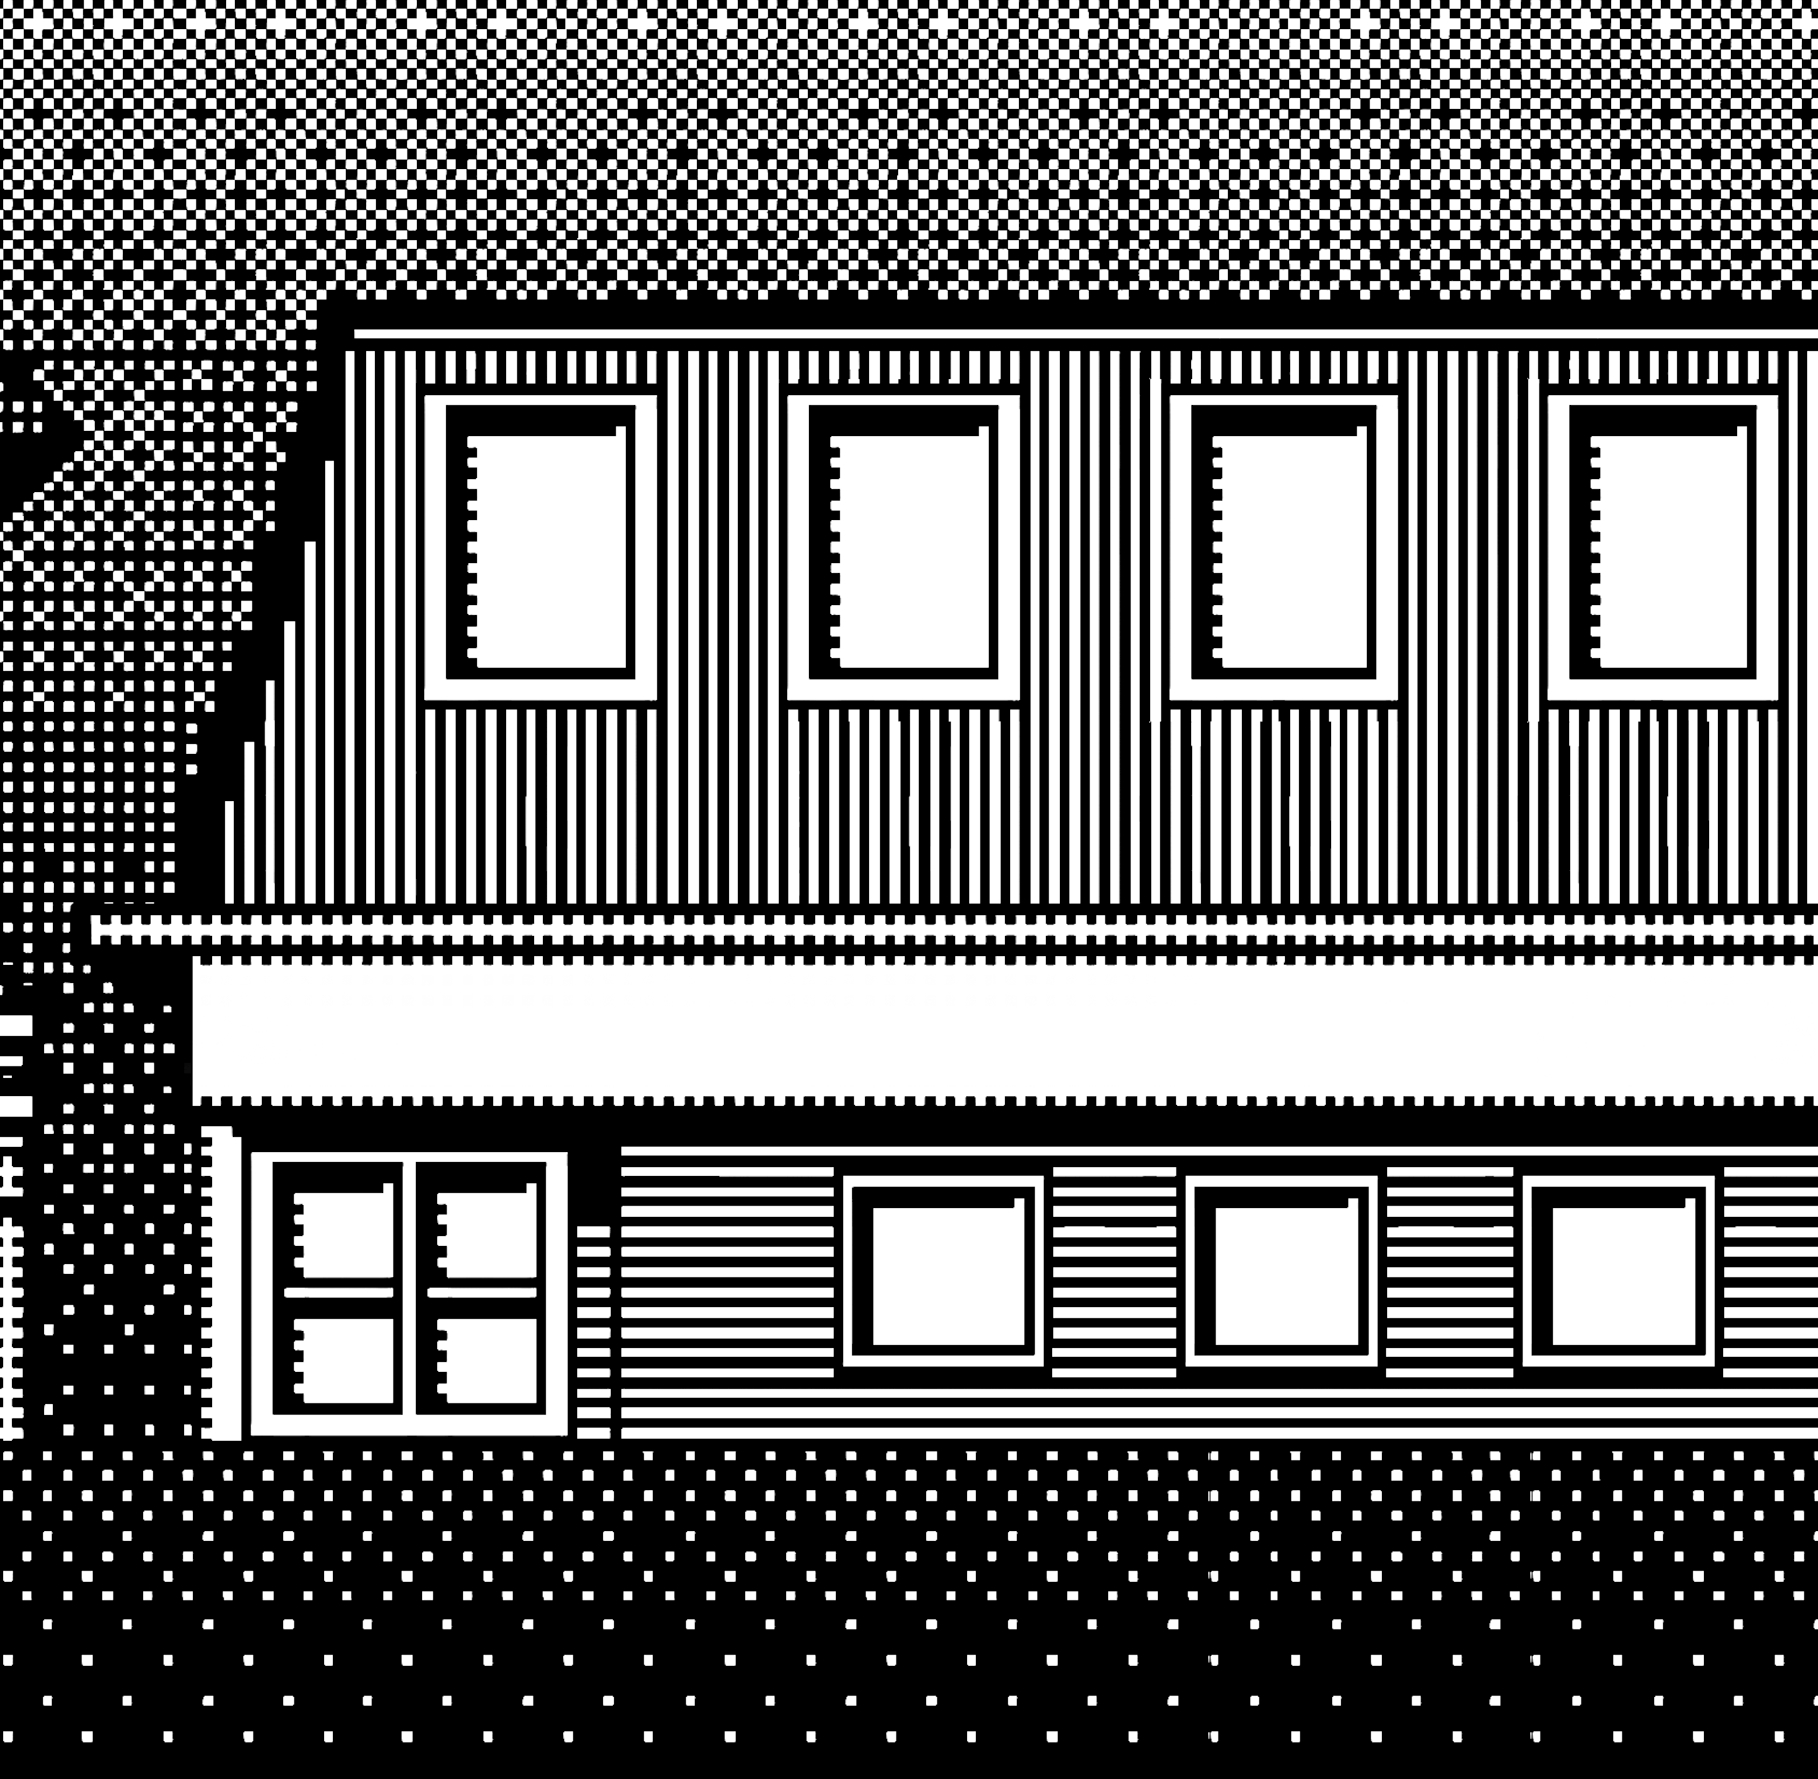 8-bit representation of building